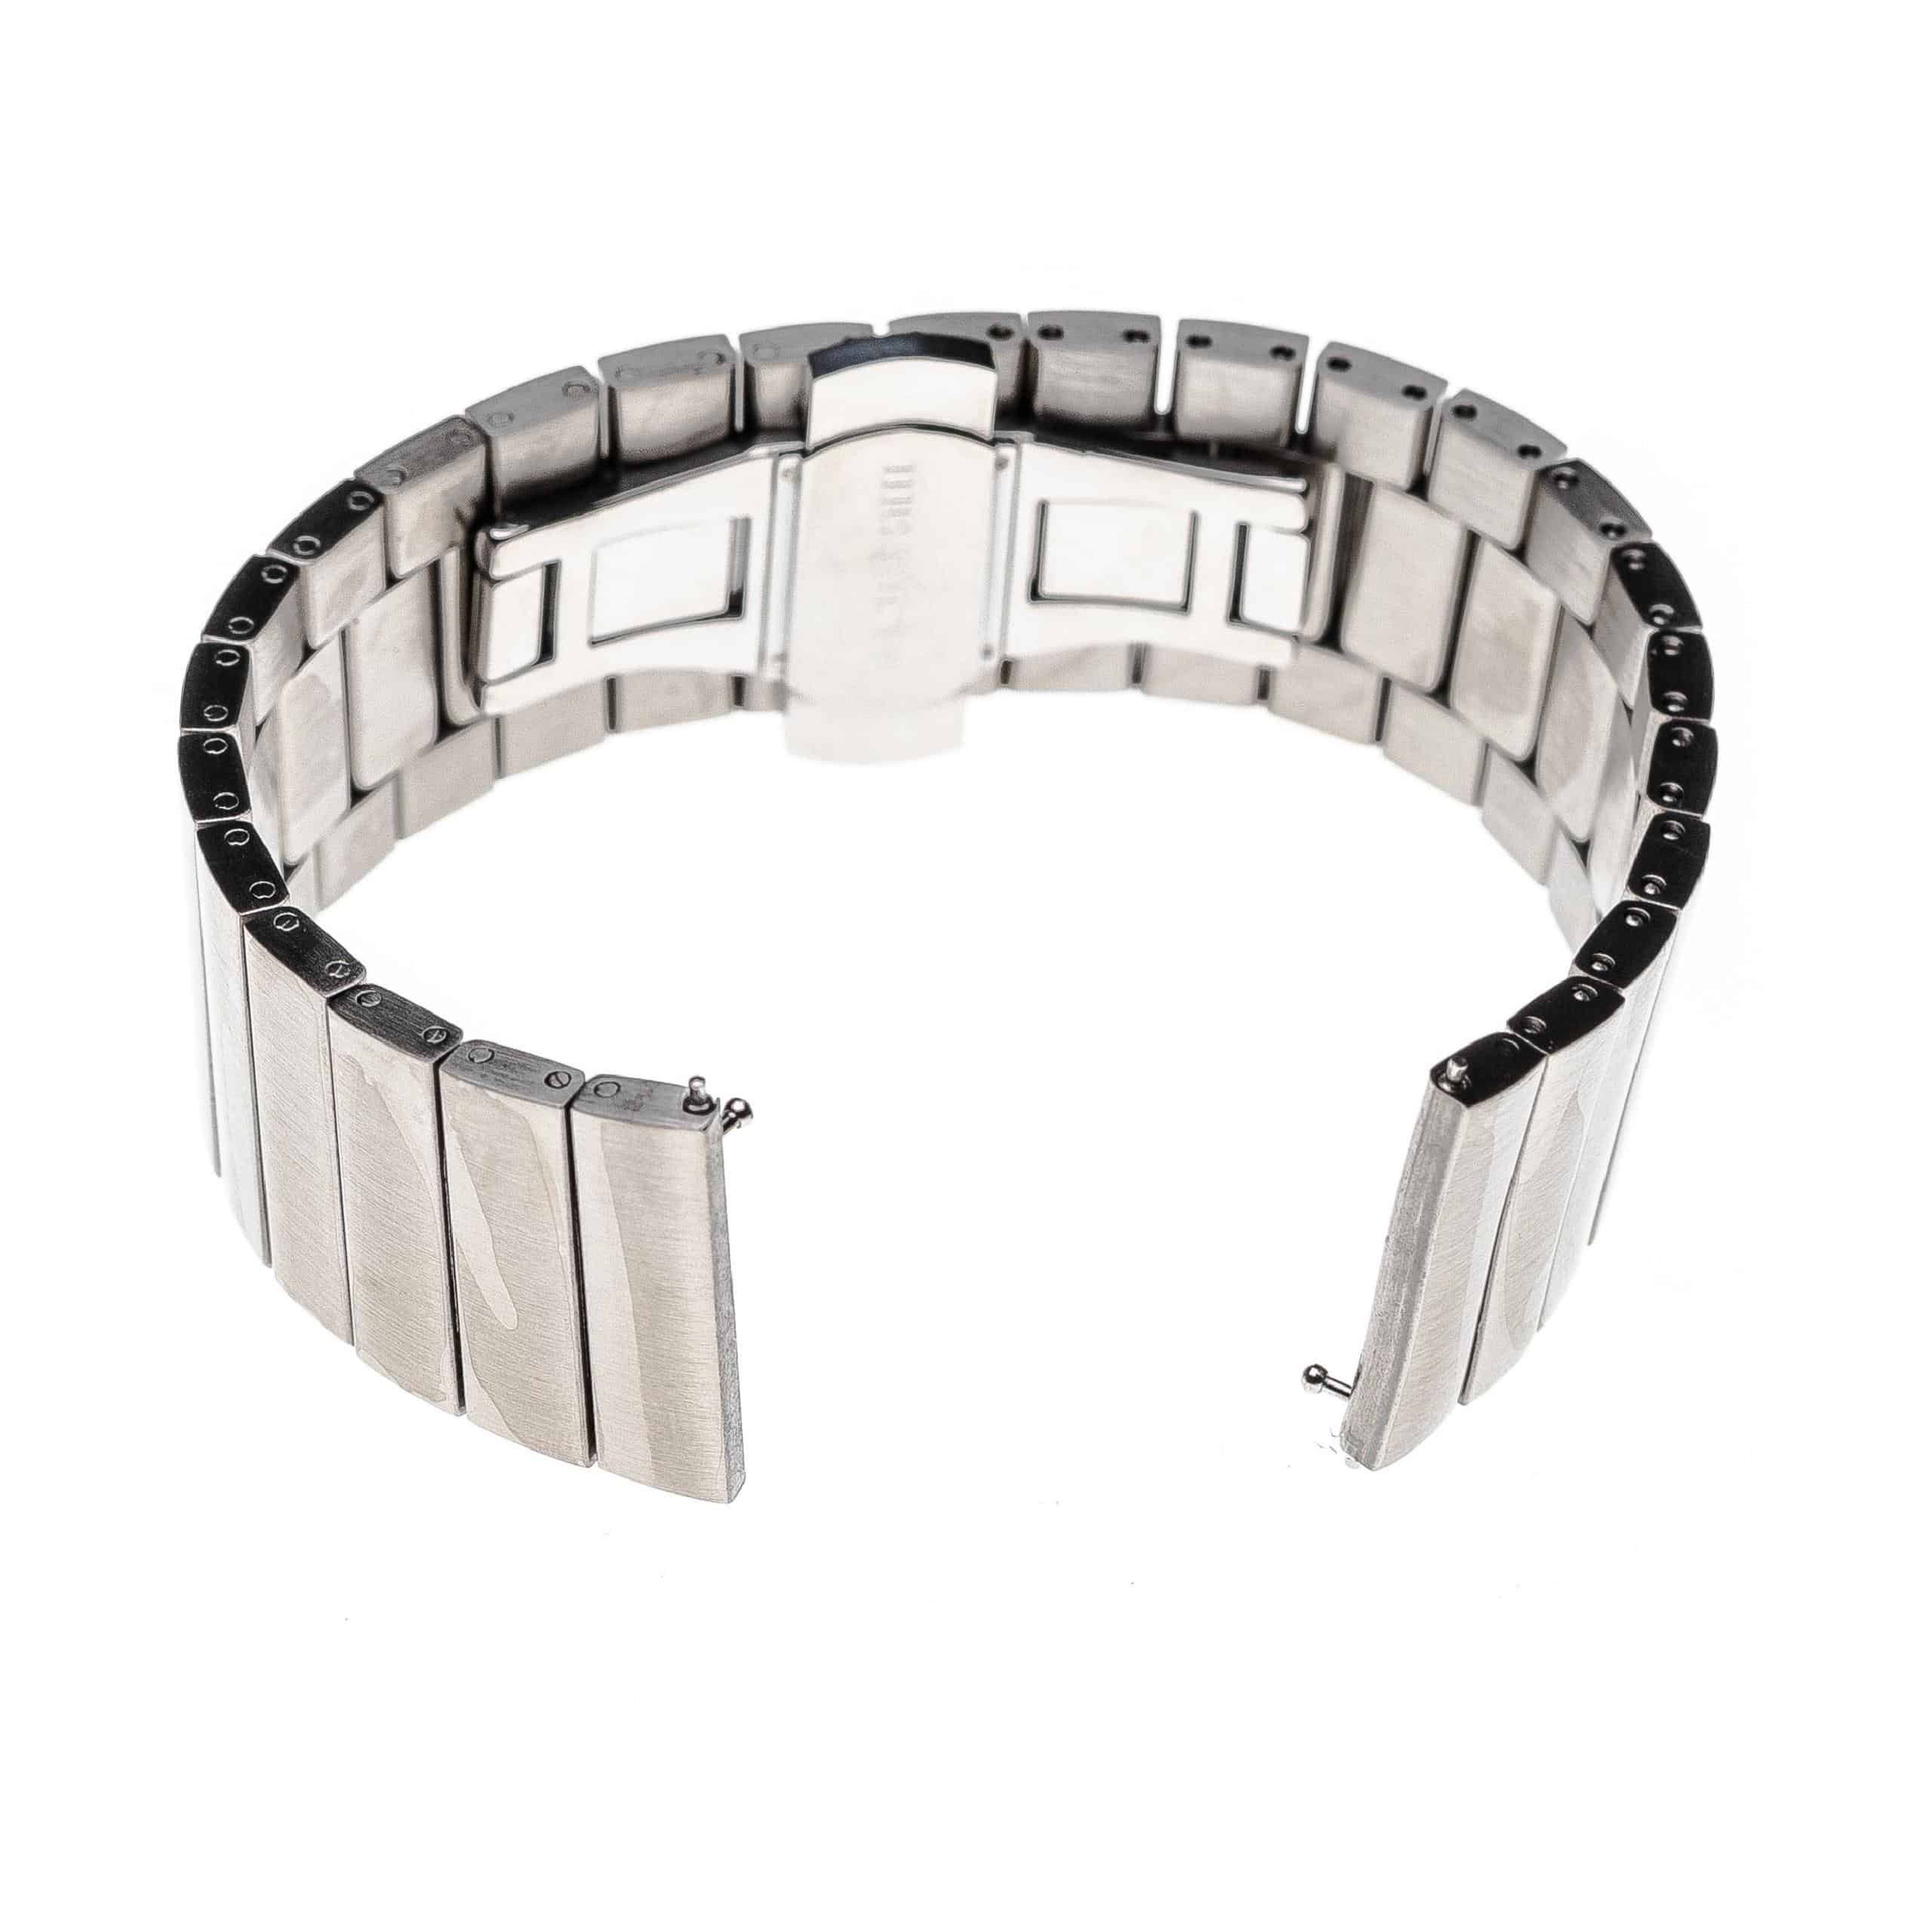 cinturino per Samsung Galaxy Watch Smartwatch - 17,4 cm lunghezza, 20mm ampiezza, acciaio inox, argento